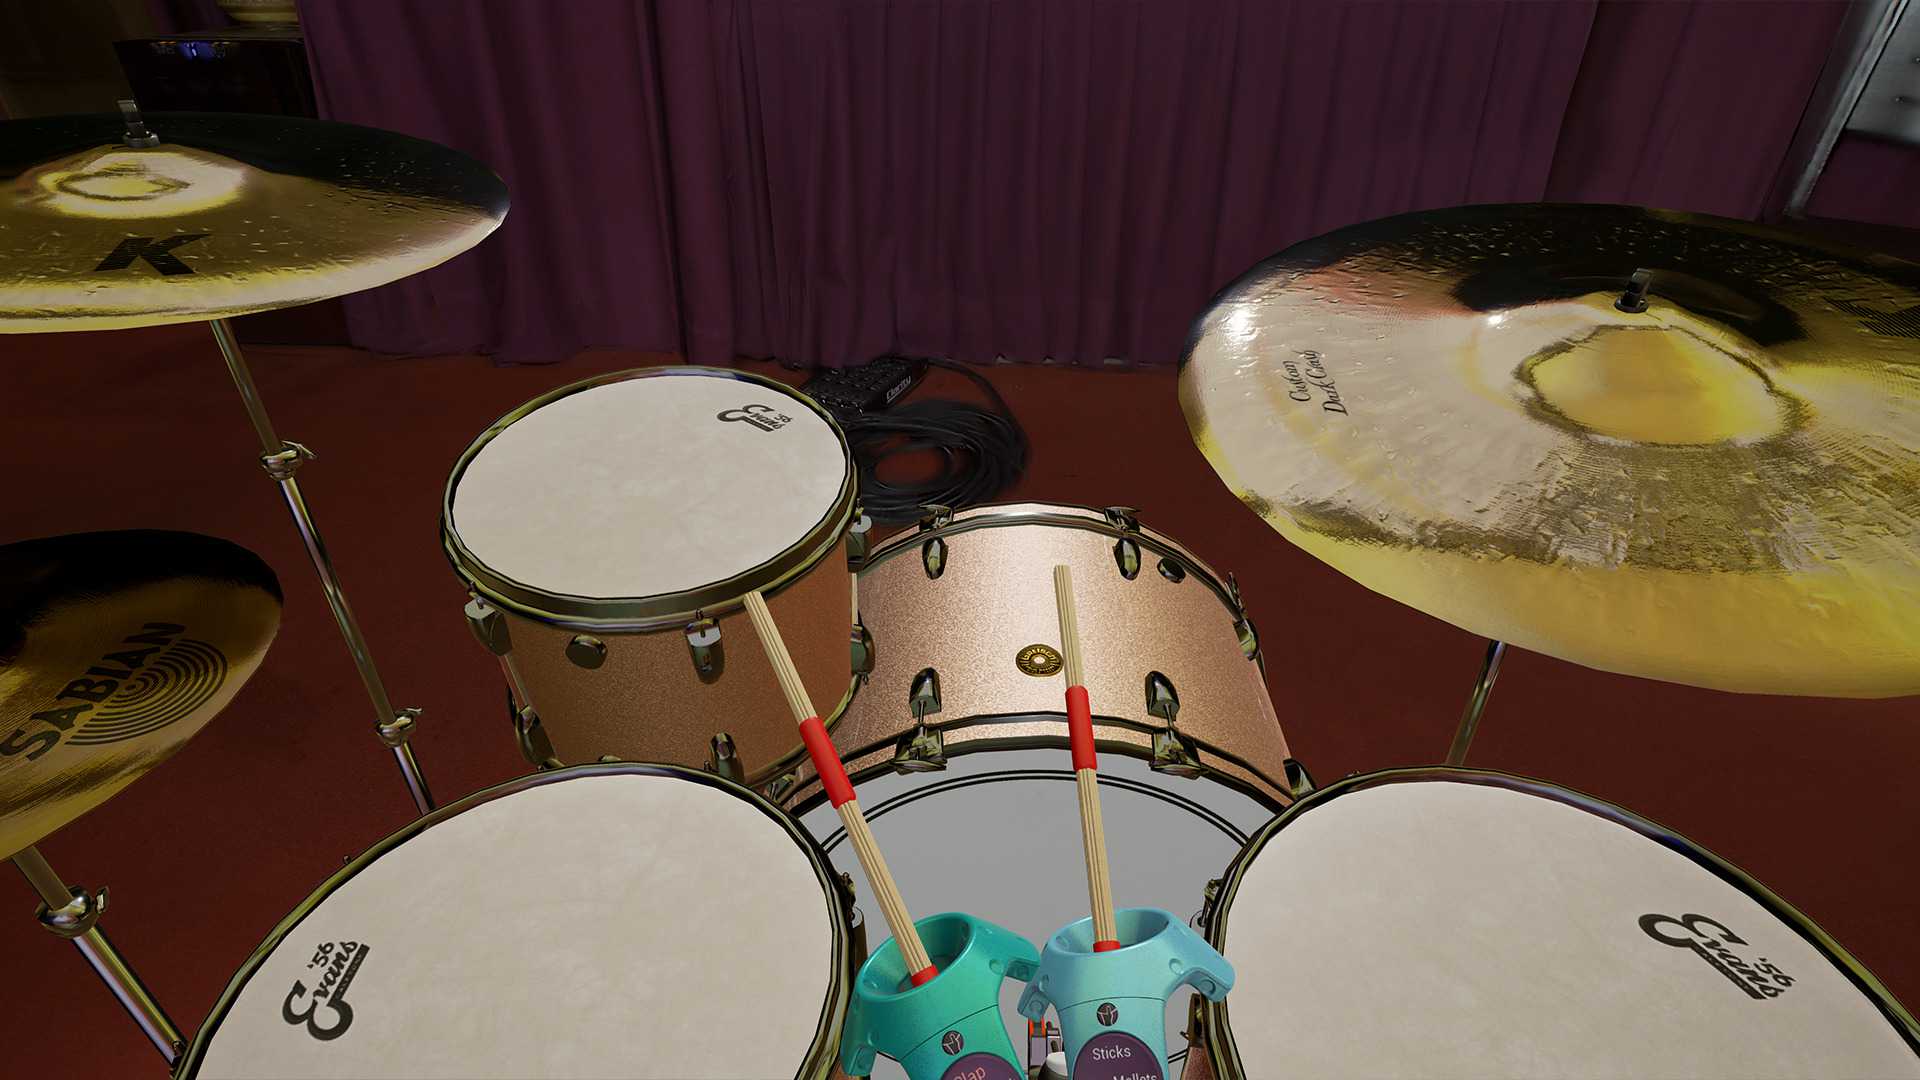 Tombé Drums VR